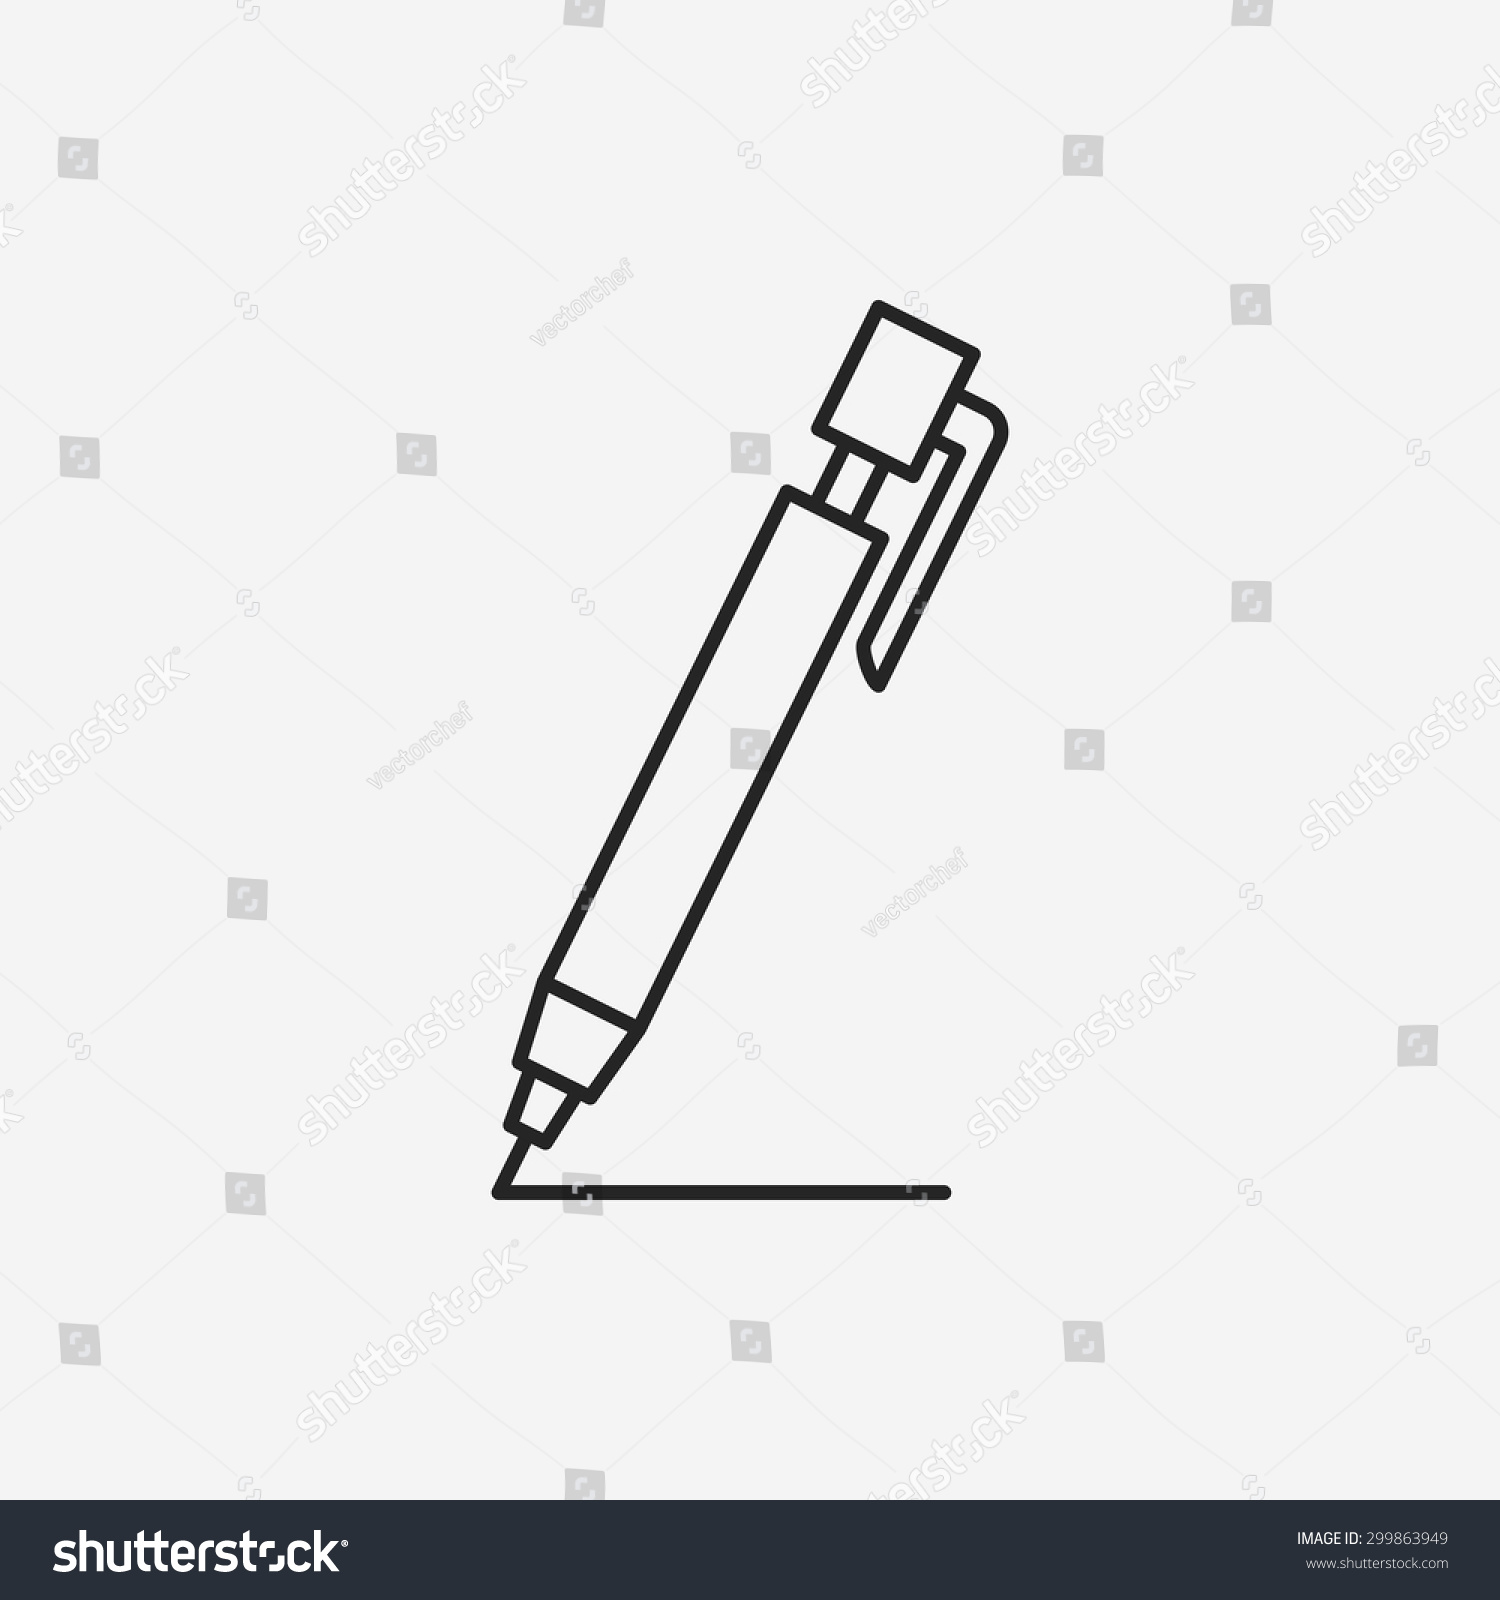 Pen Pencil Line Icon Stock Vector 299863949 - Shutterstock